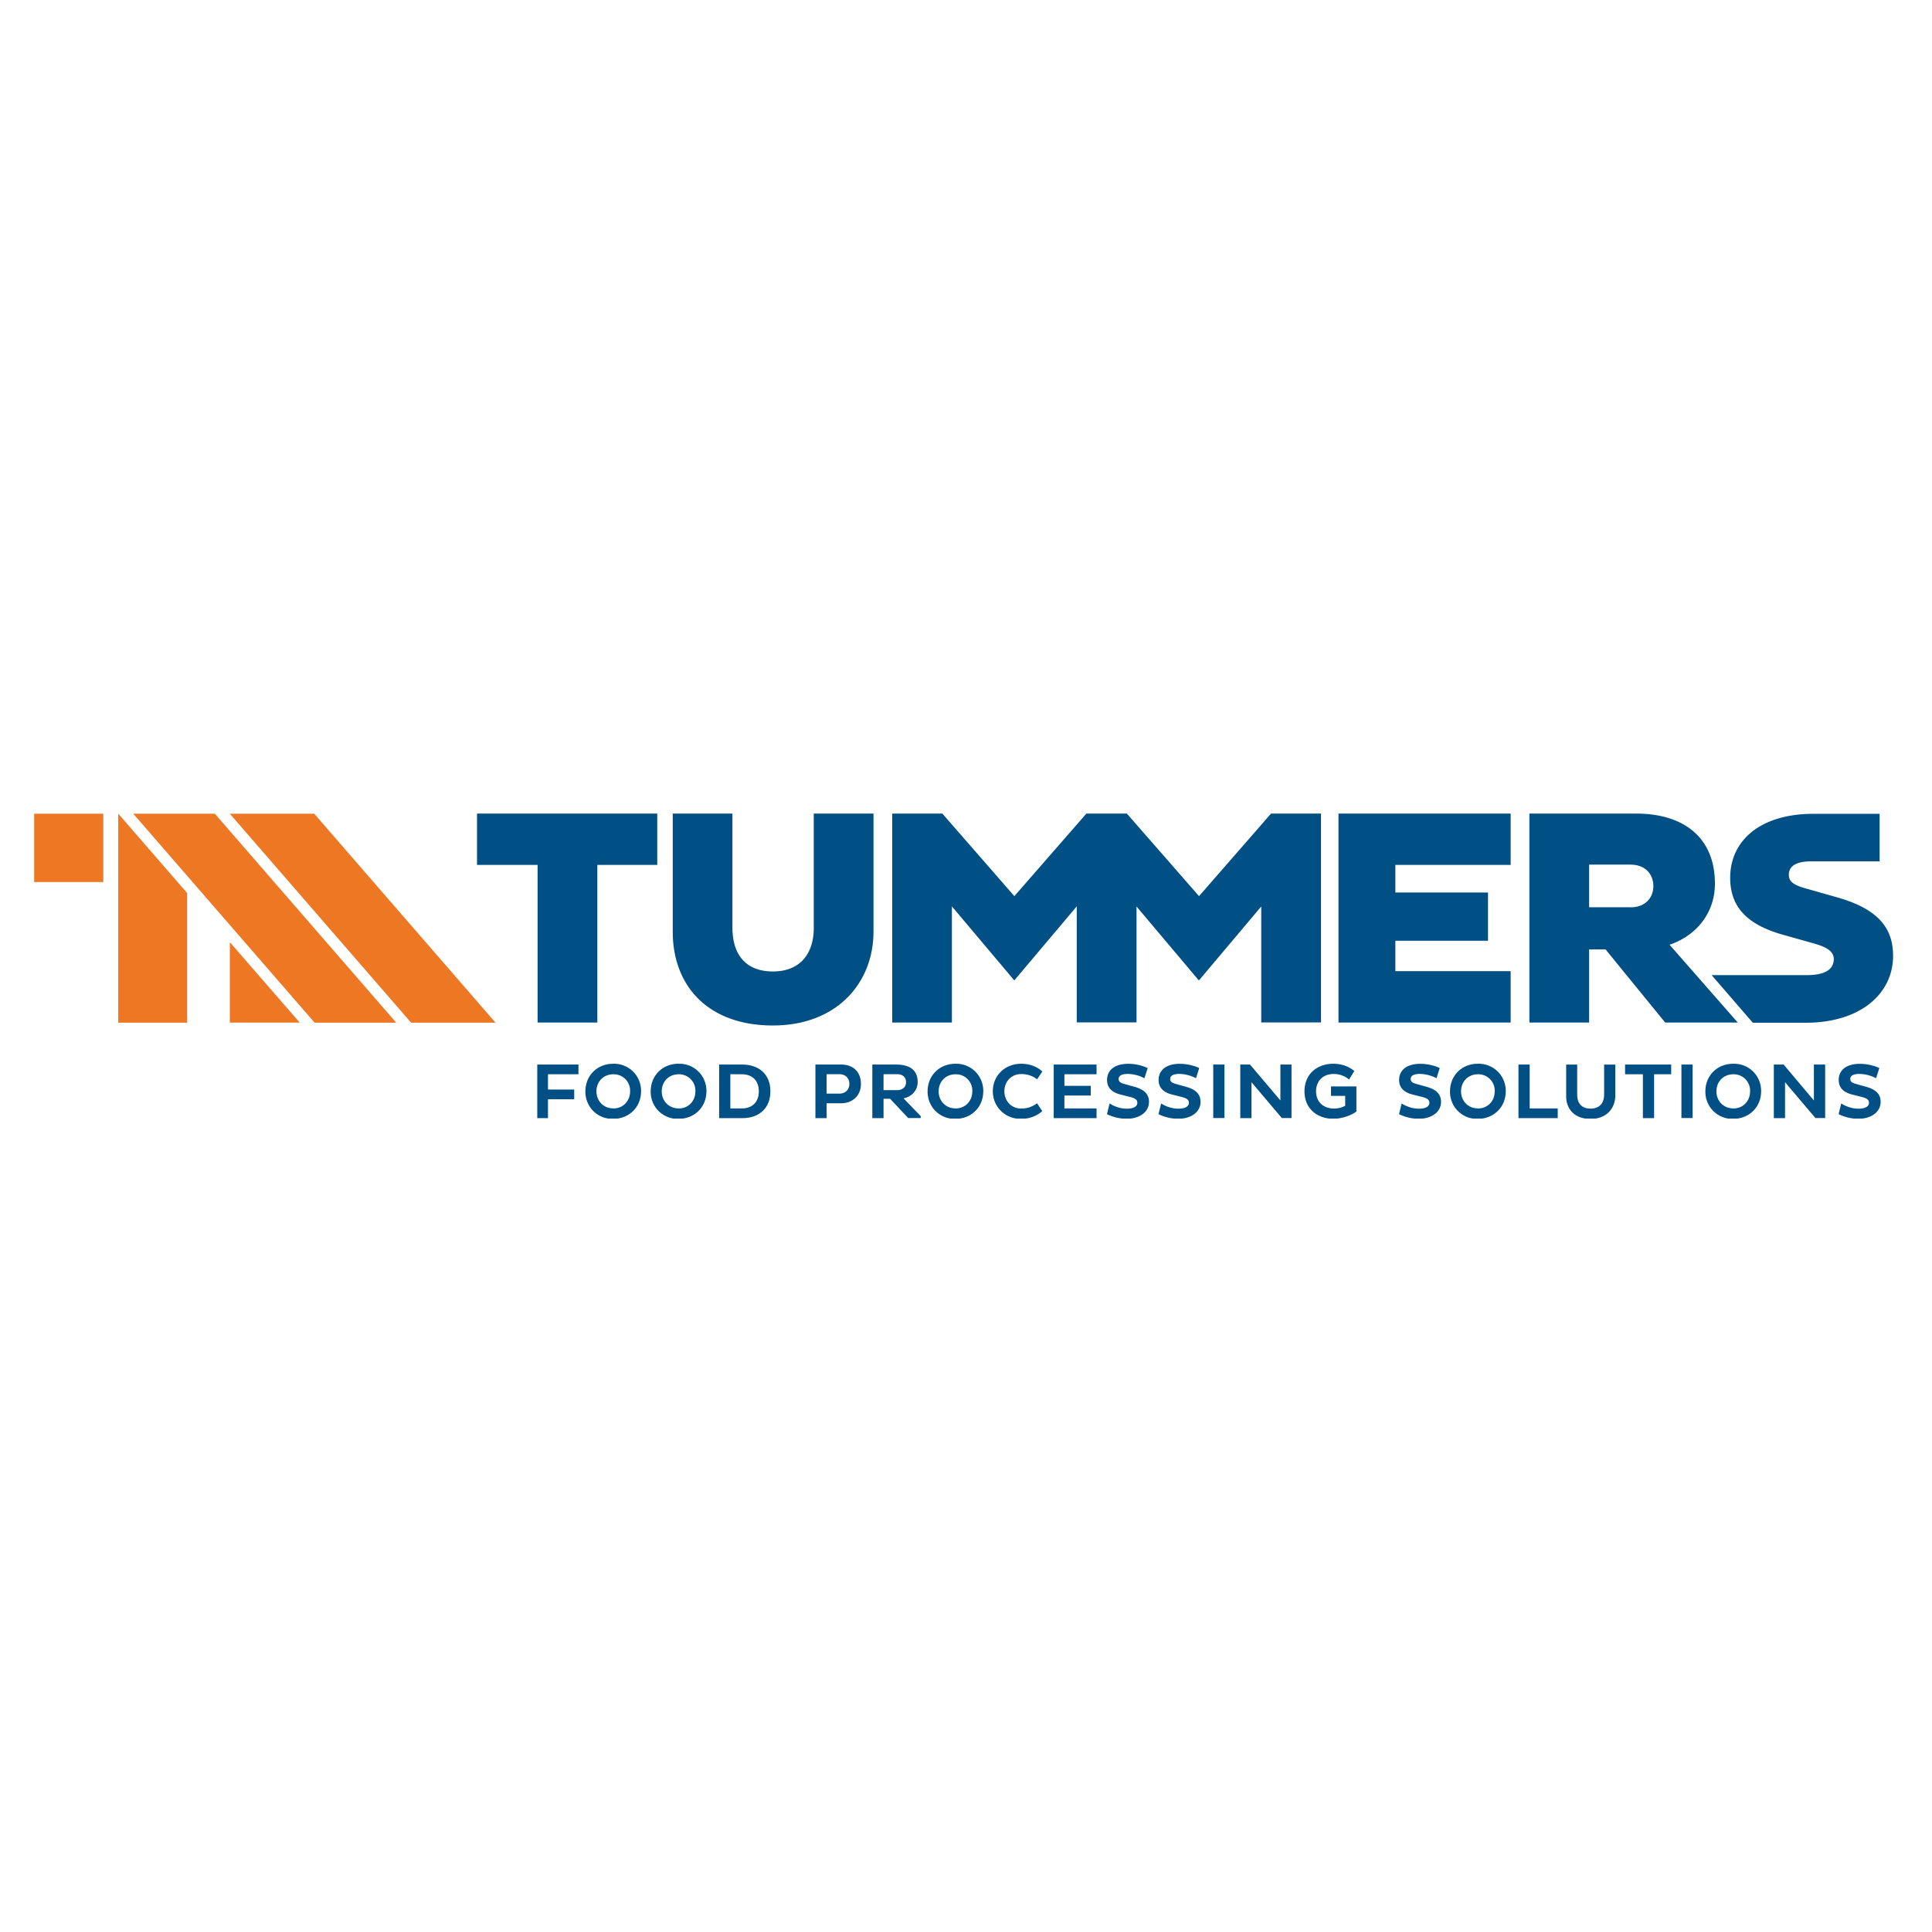 Tummers